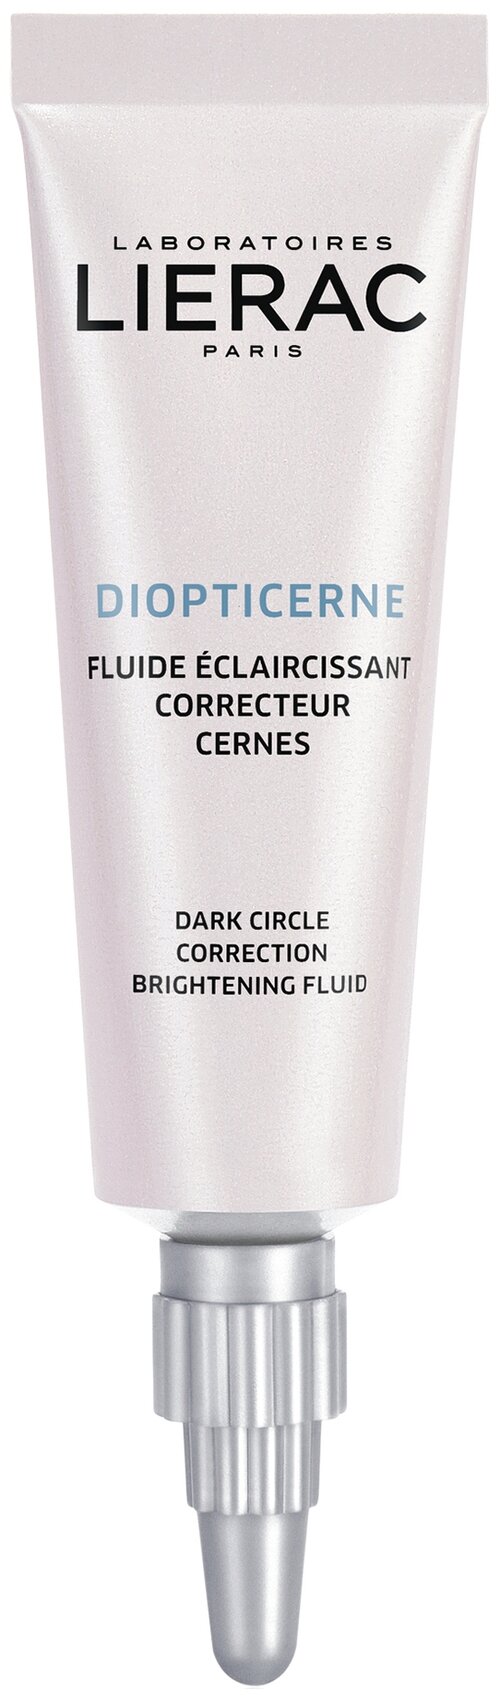 Lierac флюид осветляющий от темных кругов под глазами Diopticerne Fluide Éclaircissant Correcteur Cernes, 15 мл